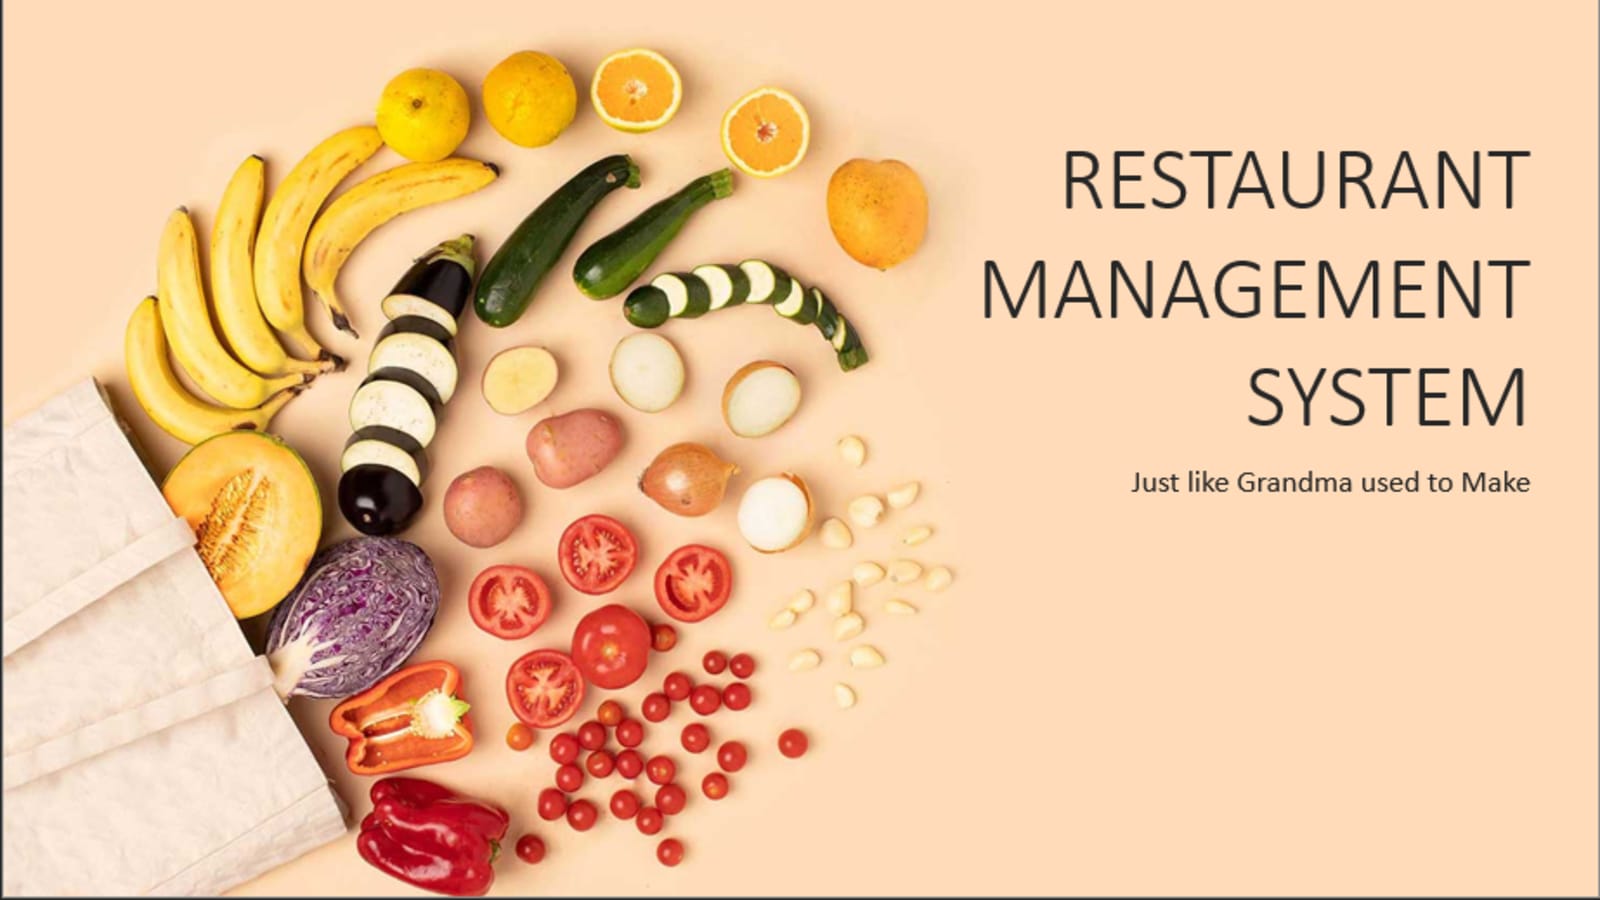 Database Design Of A Restaurant Management System From User Story To Relational Model Dev Community